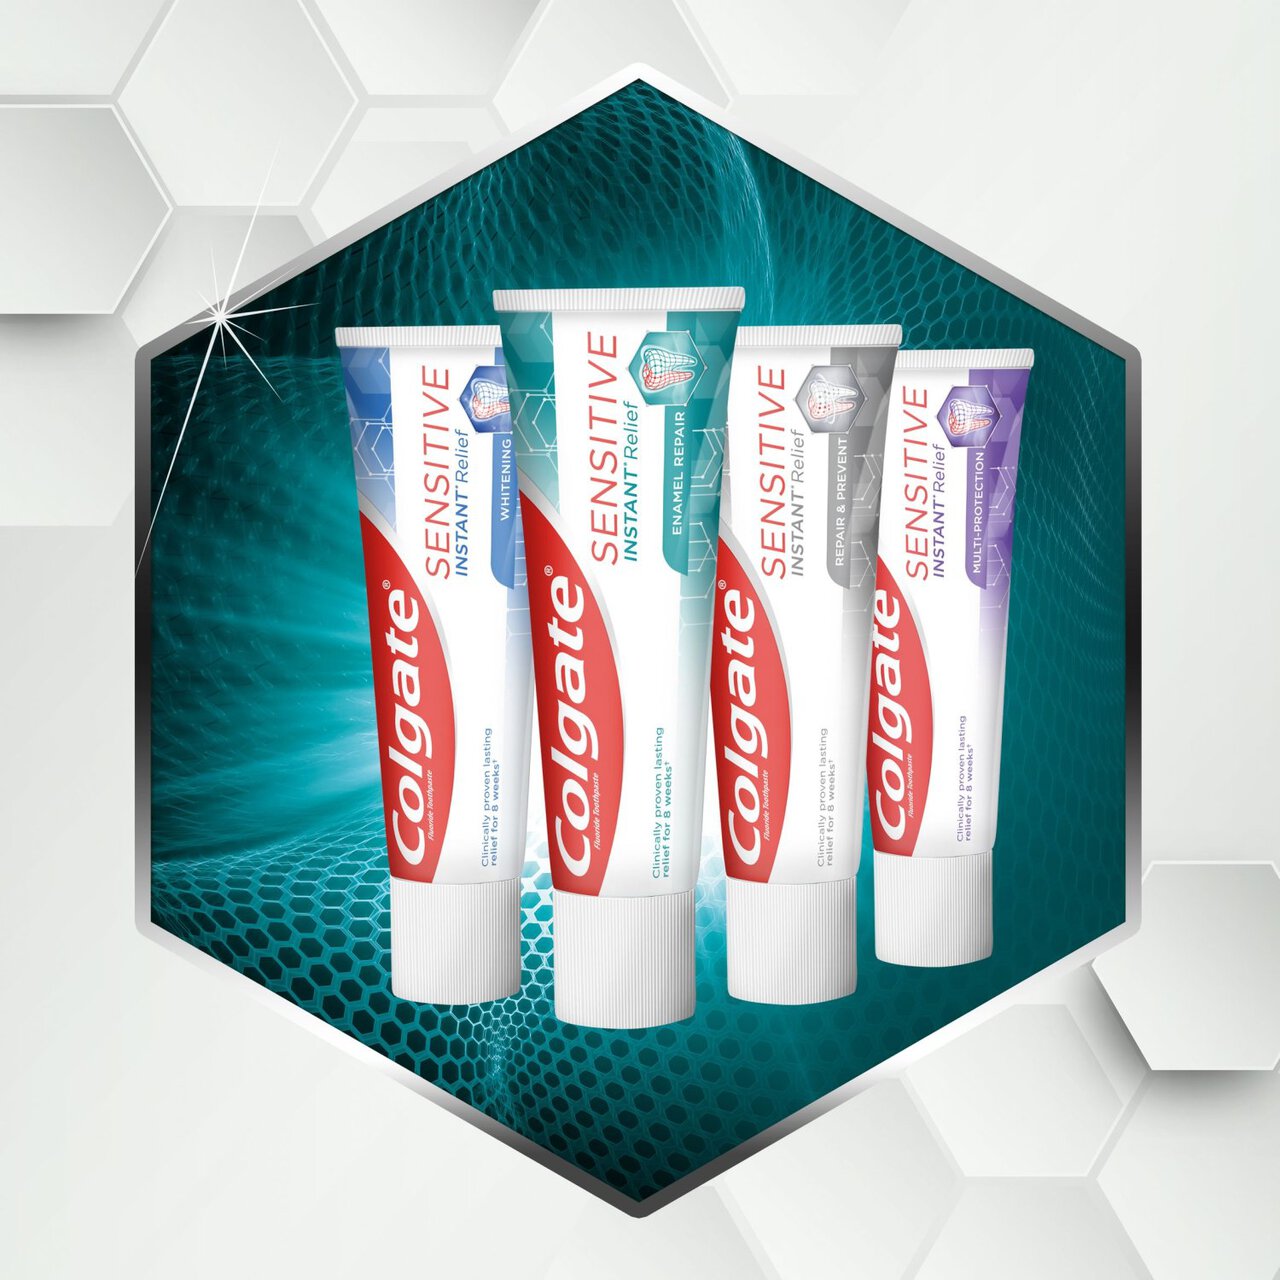 Colgate Sensitive Instant Relief Enamel Repair Toothpaste 75ml